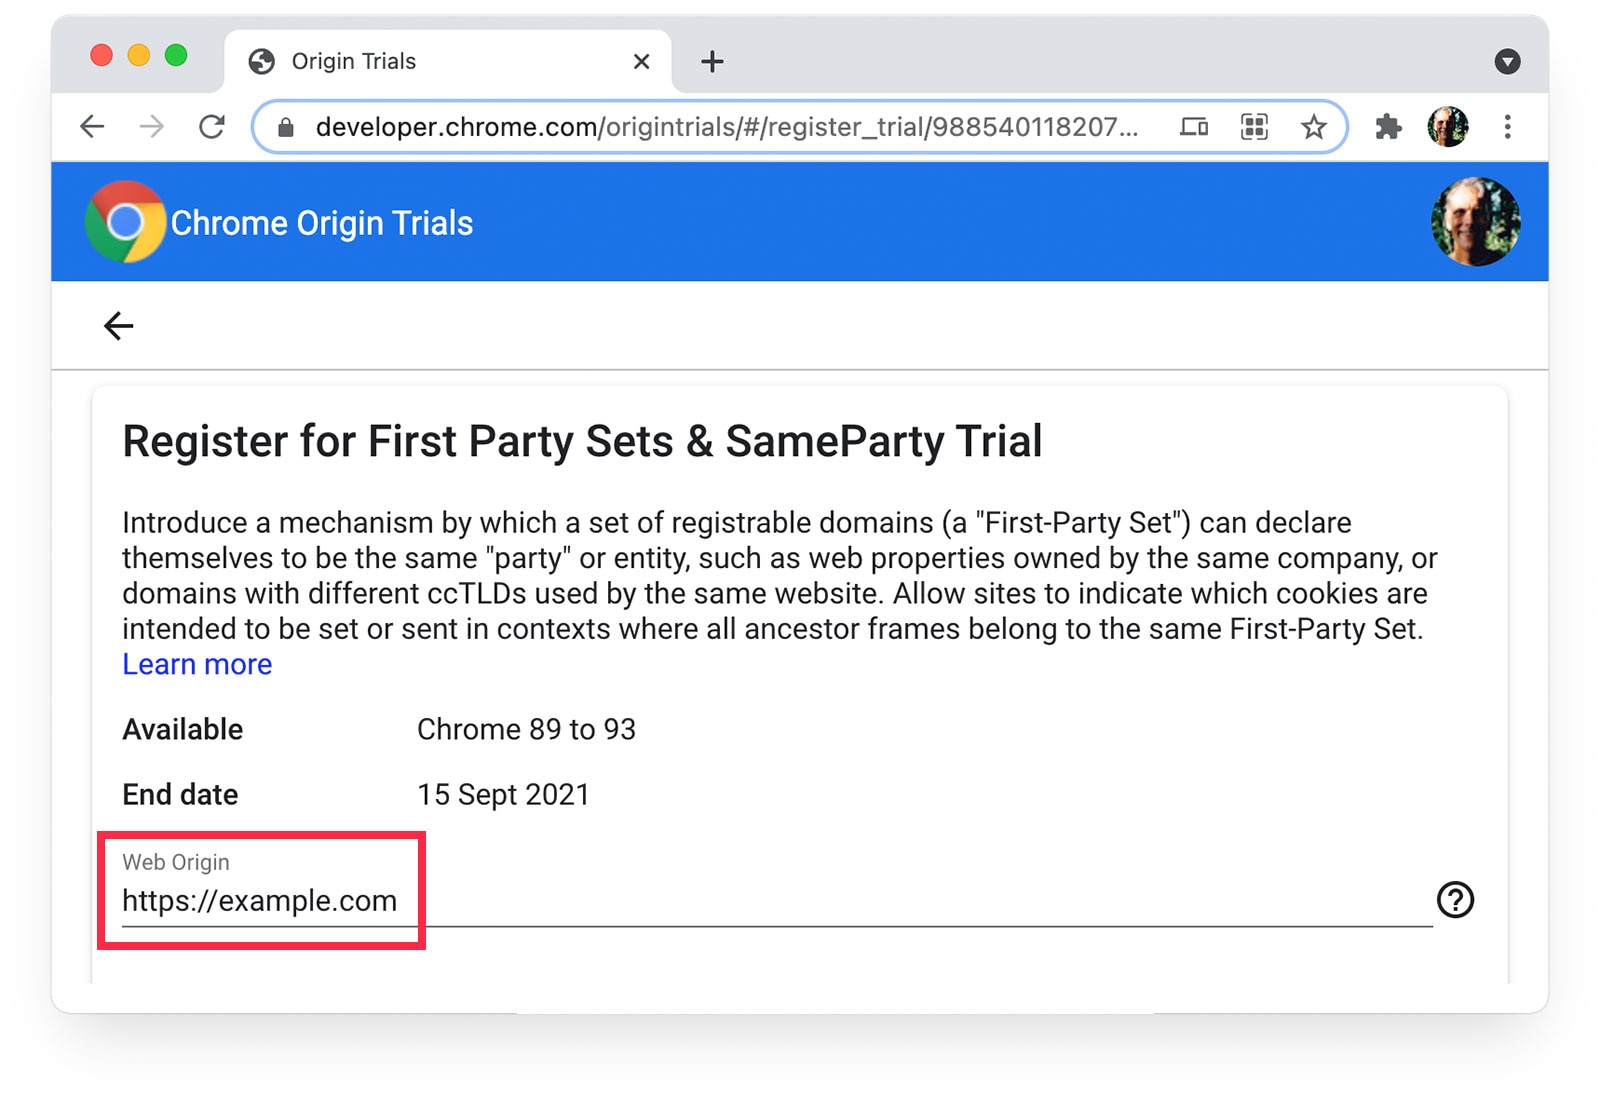 Chrome 來源試用 
網頁顯示已選取 https://example.com 為「網路來源」。